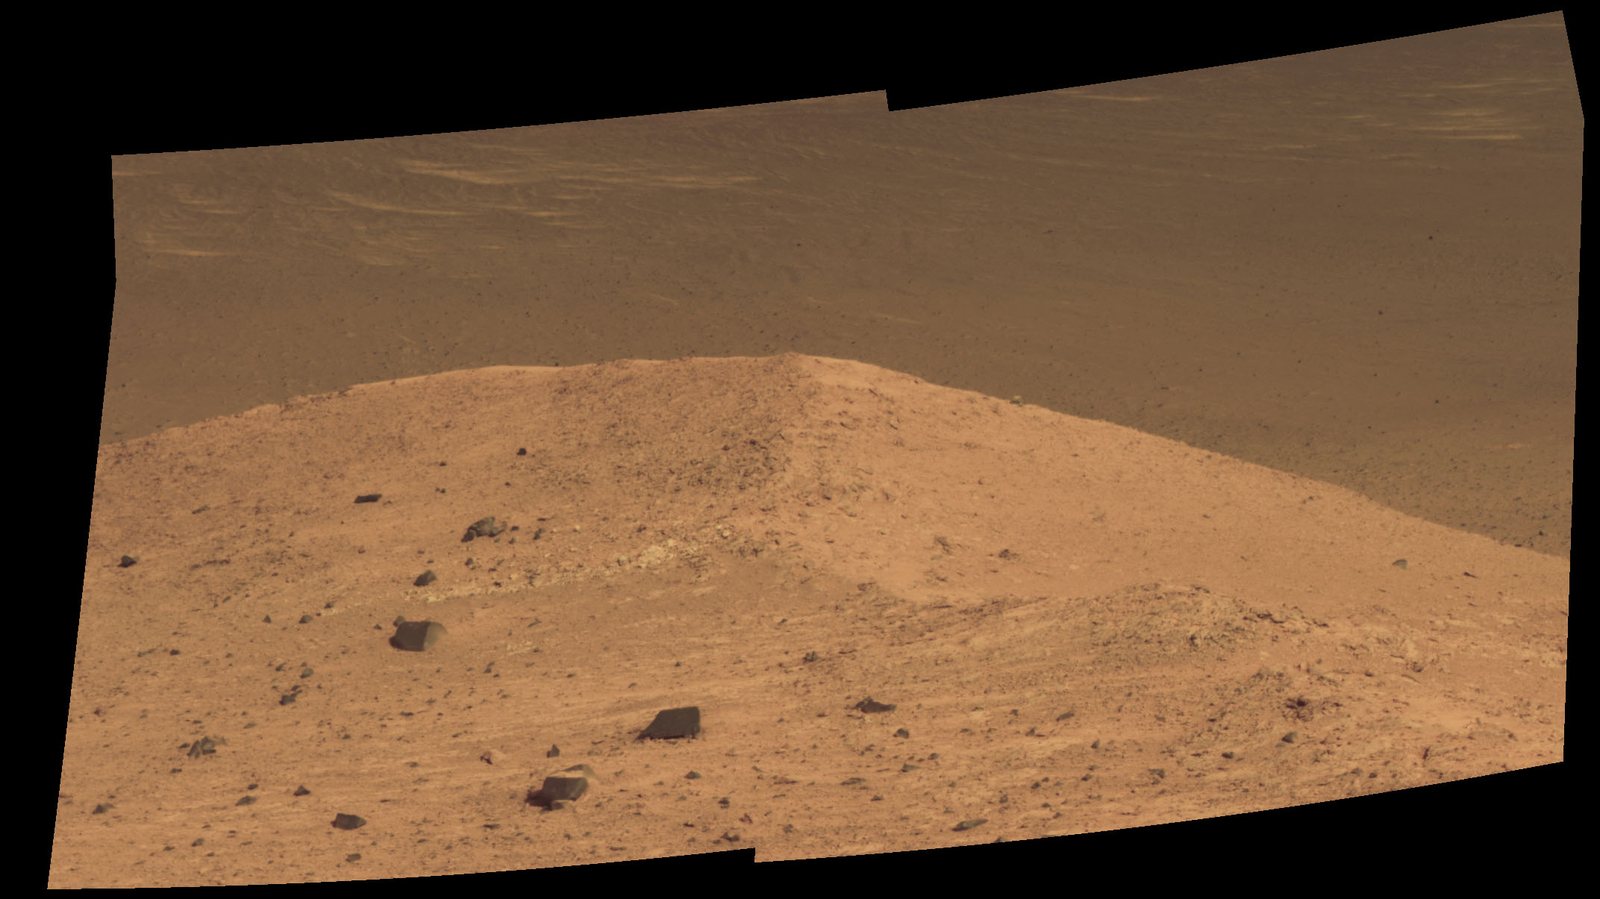 'Spirit Mound' at Edge of Endeavour Crater, Mars